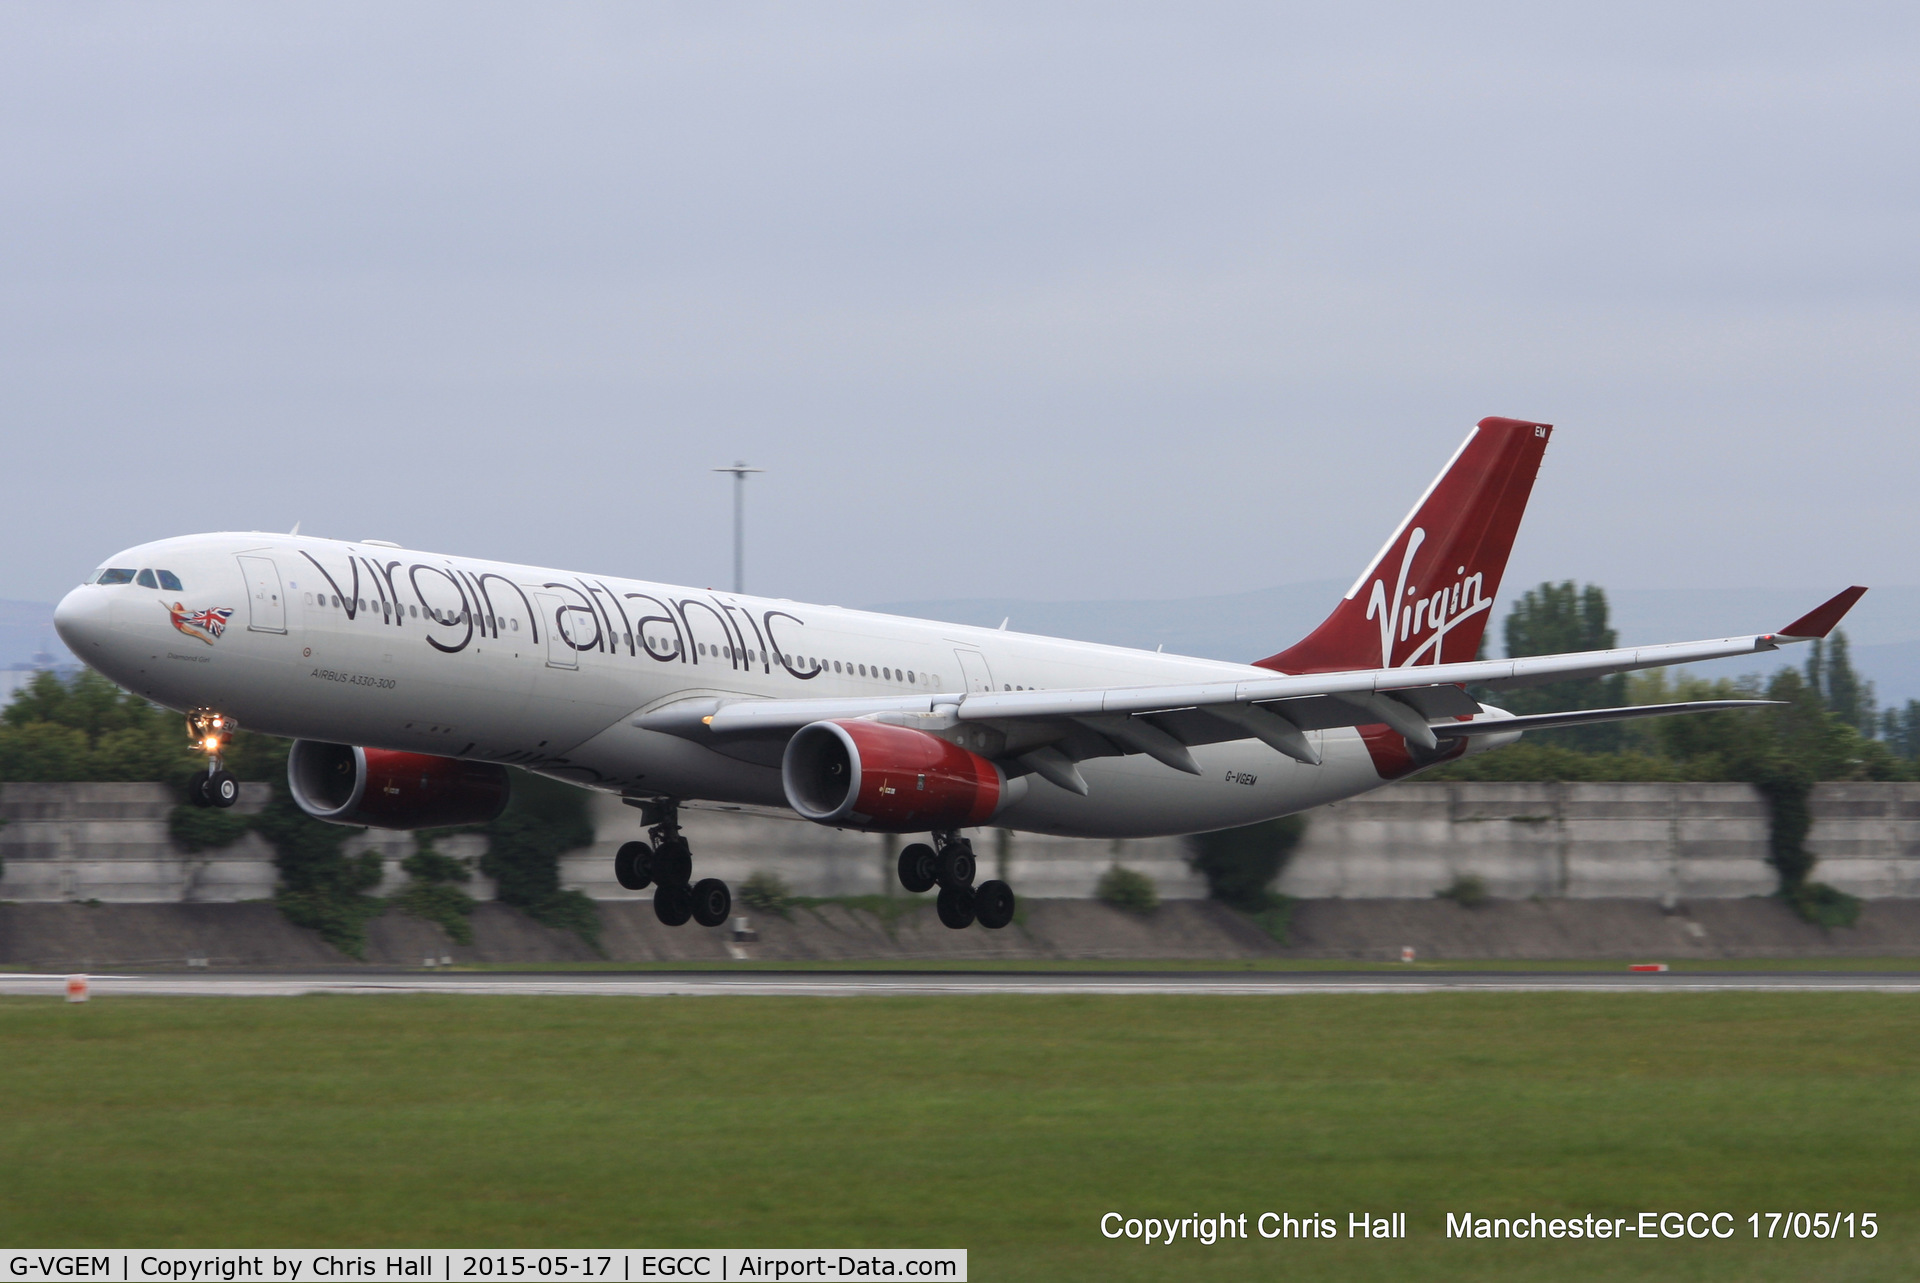 G-VGEM, 2011 Airbus A330-343X C/N 1215, Virgin Atlantic